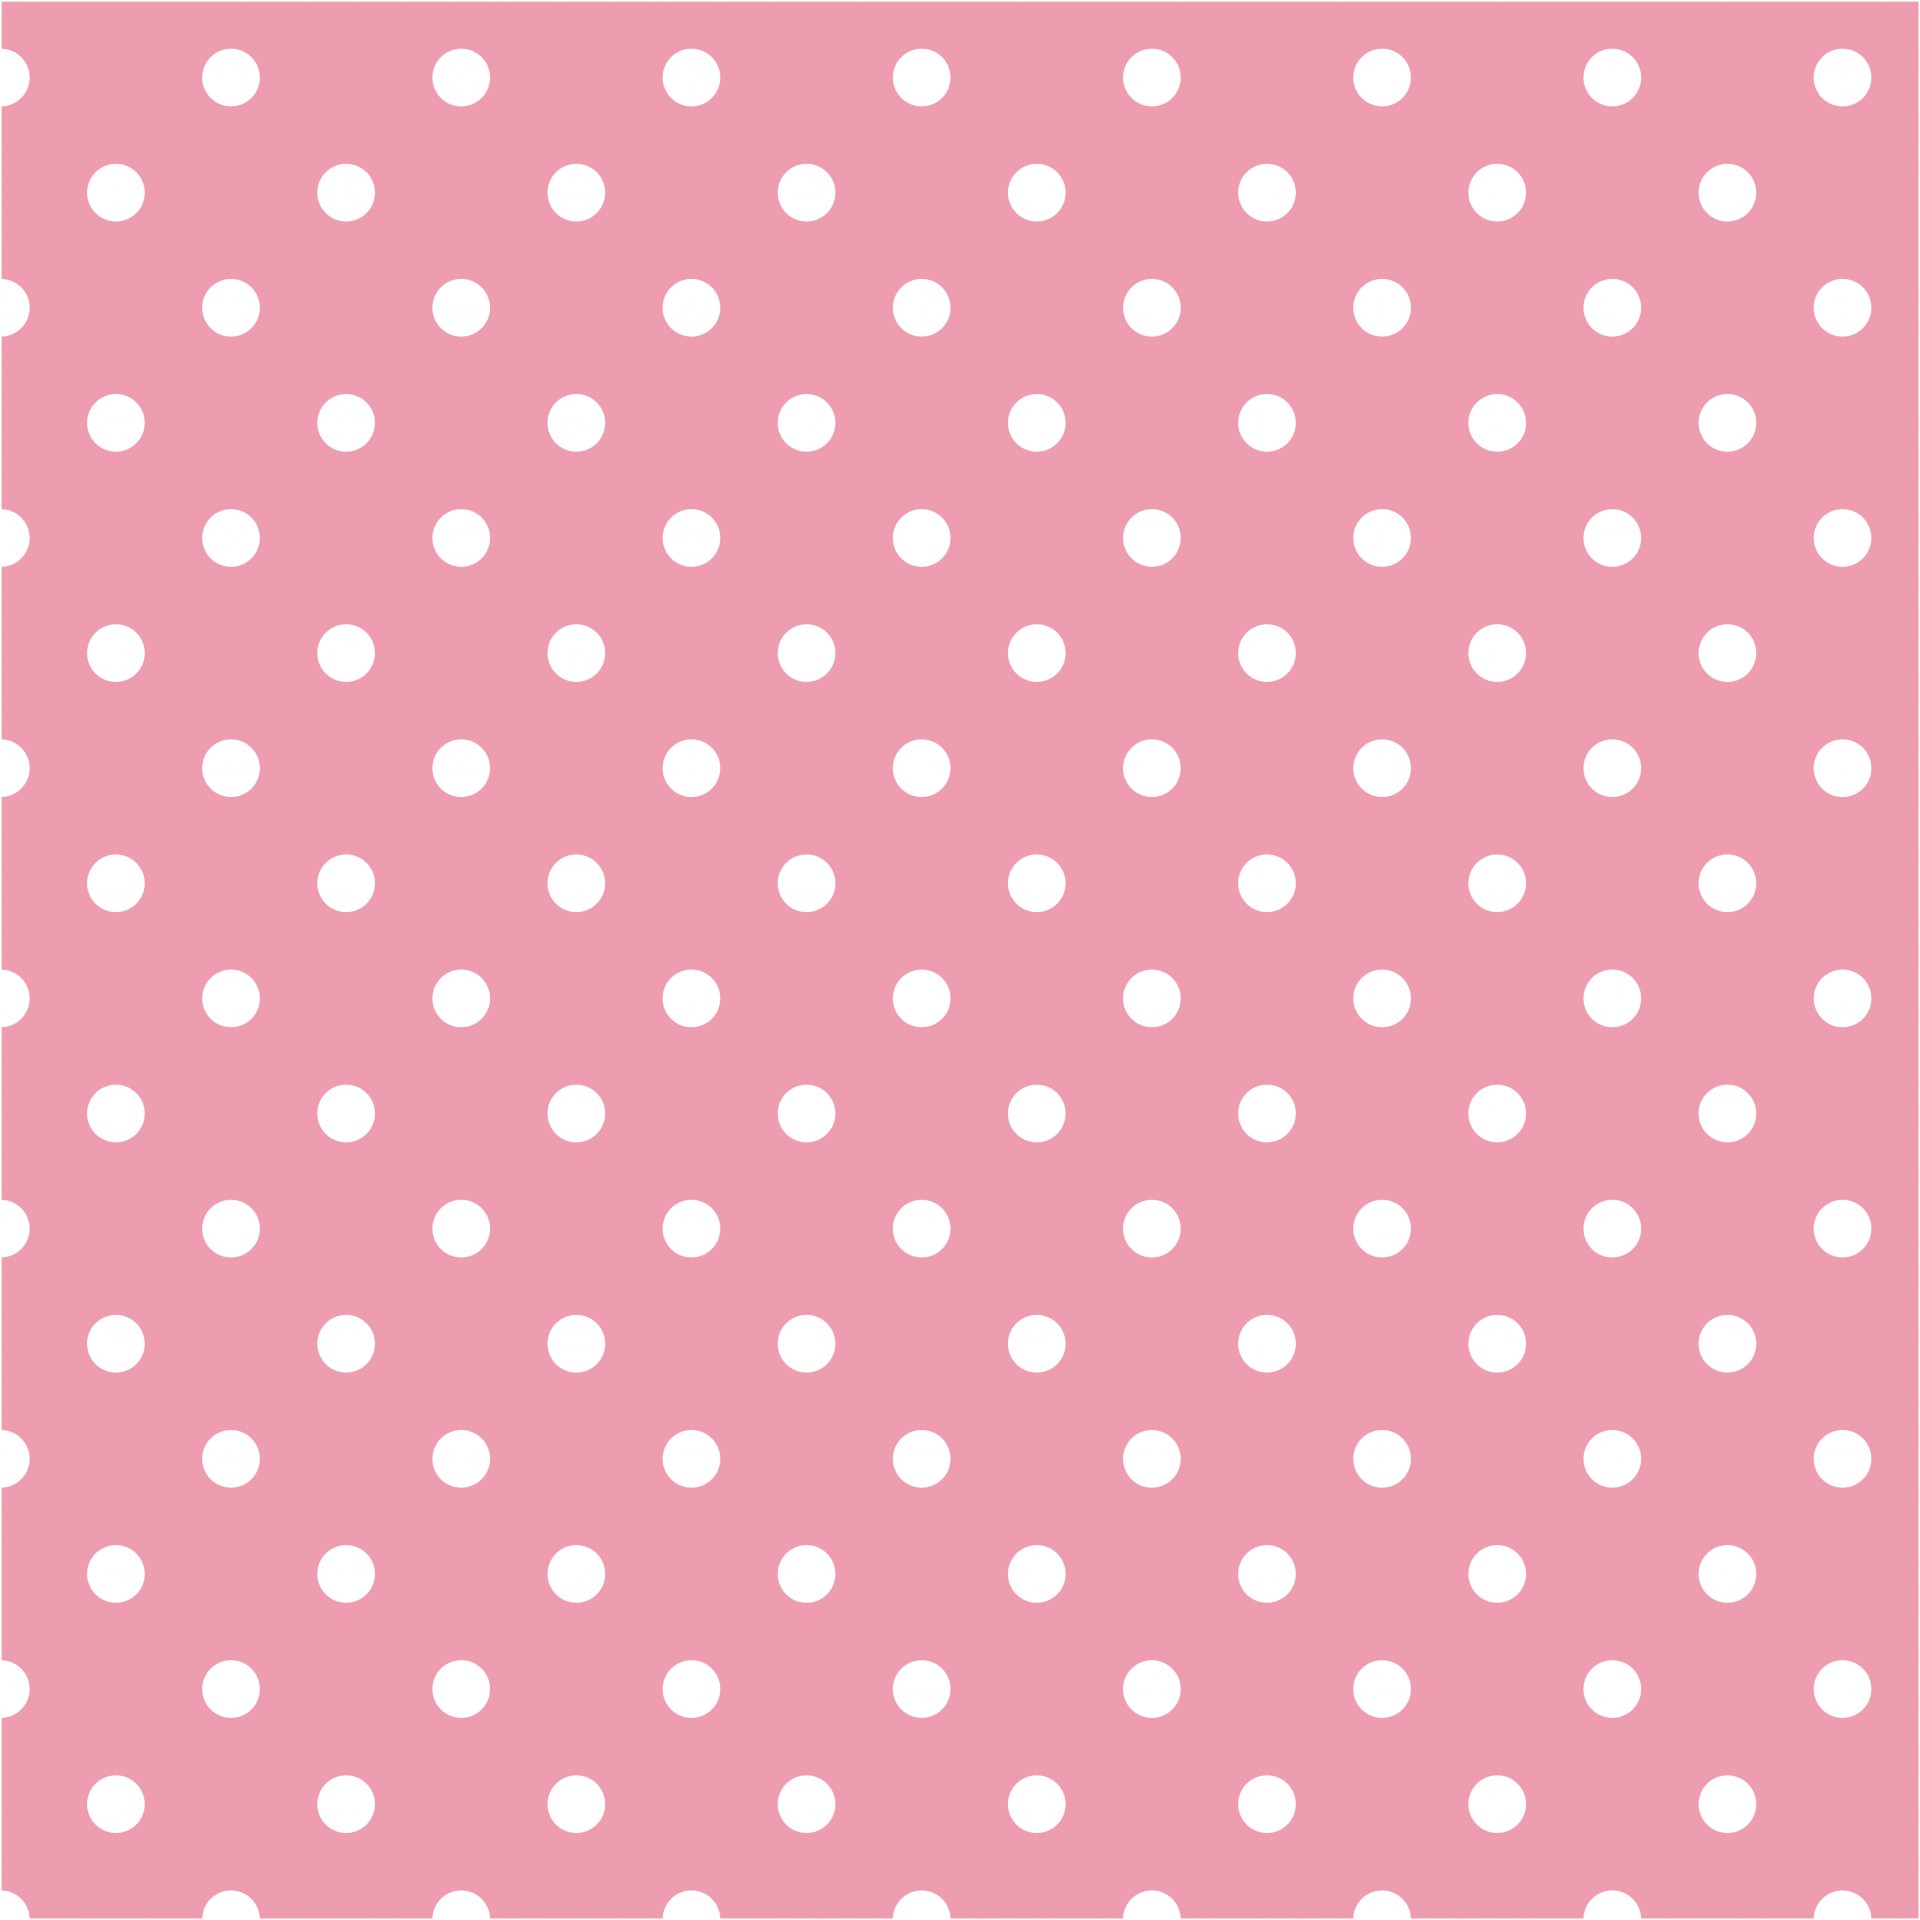 polka dots pink white free photo